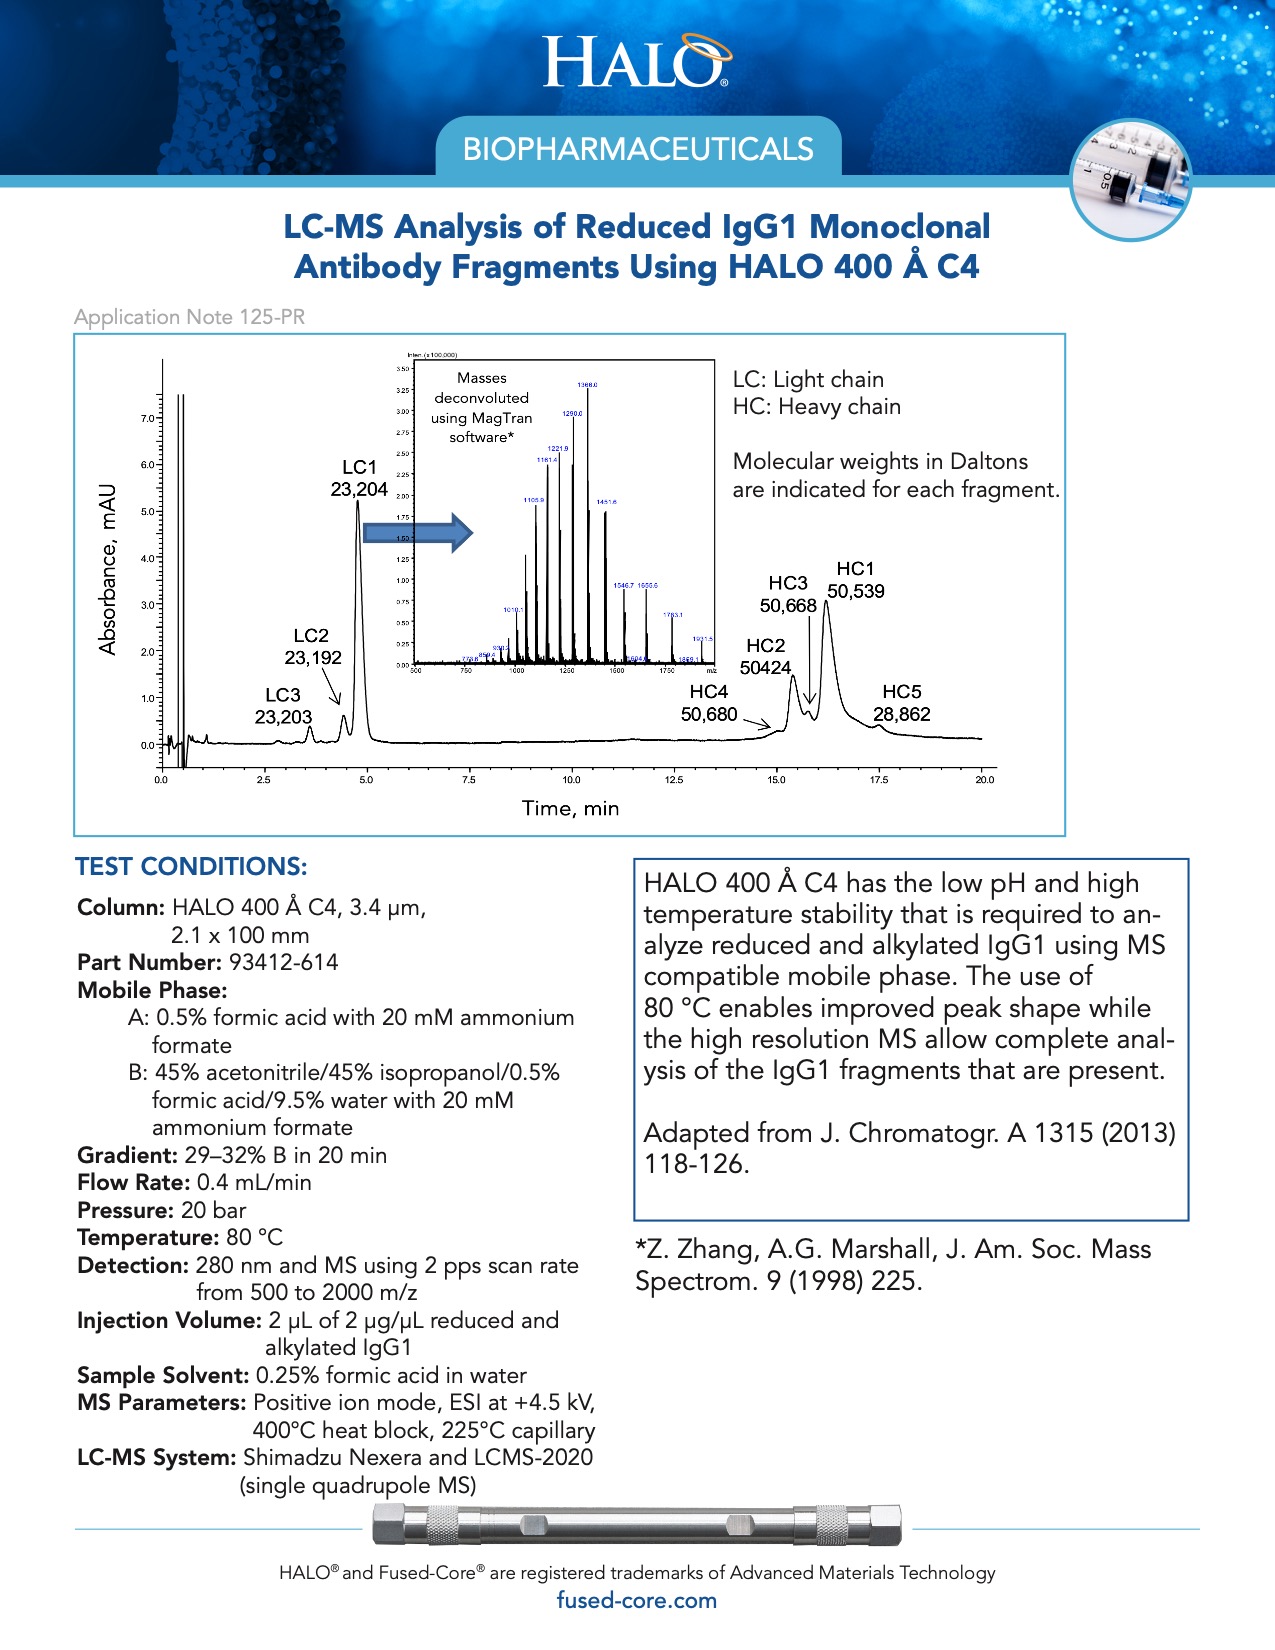 lc-ms analysis of reduced igg1 monoclonal antibody fragments using halo 400 c4 column